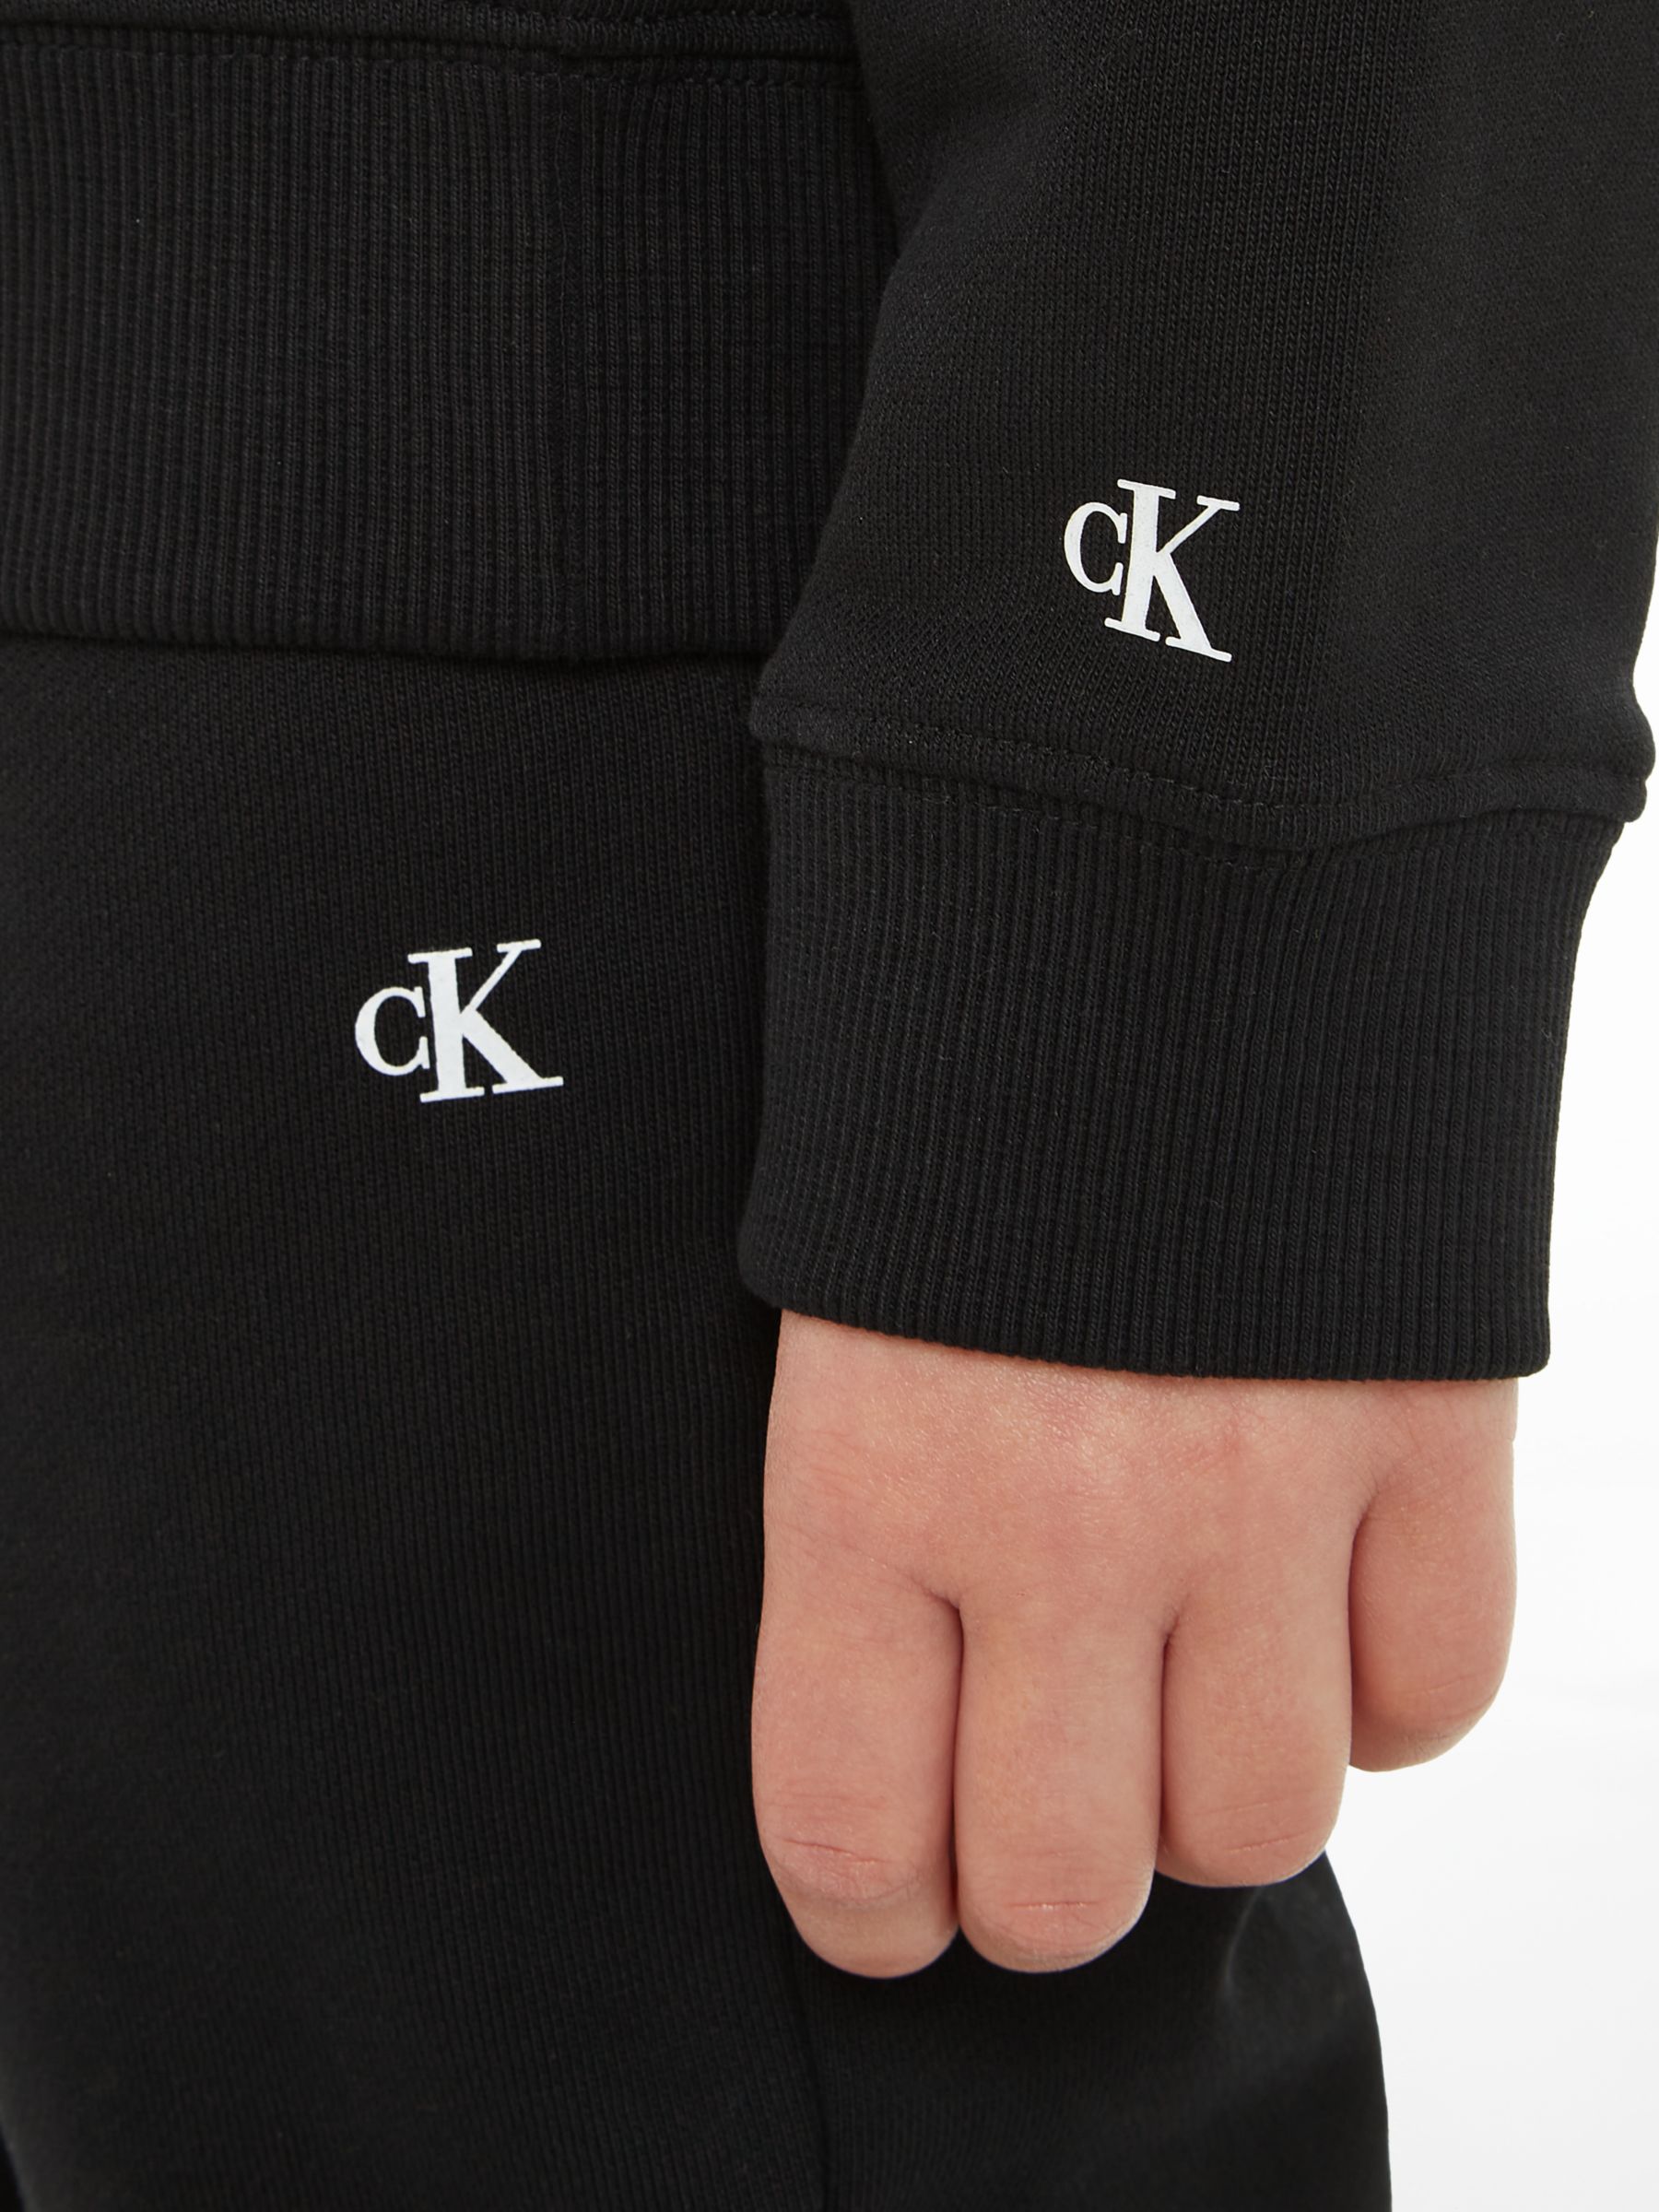 Calvin Klein Kids' Cotton Logo Sweatshirt & Joggers Set, Ck Black, 10 years